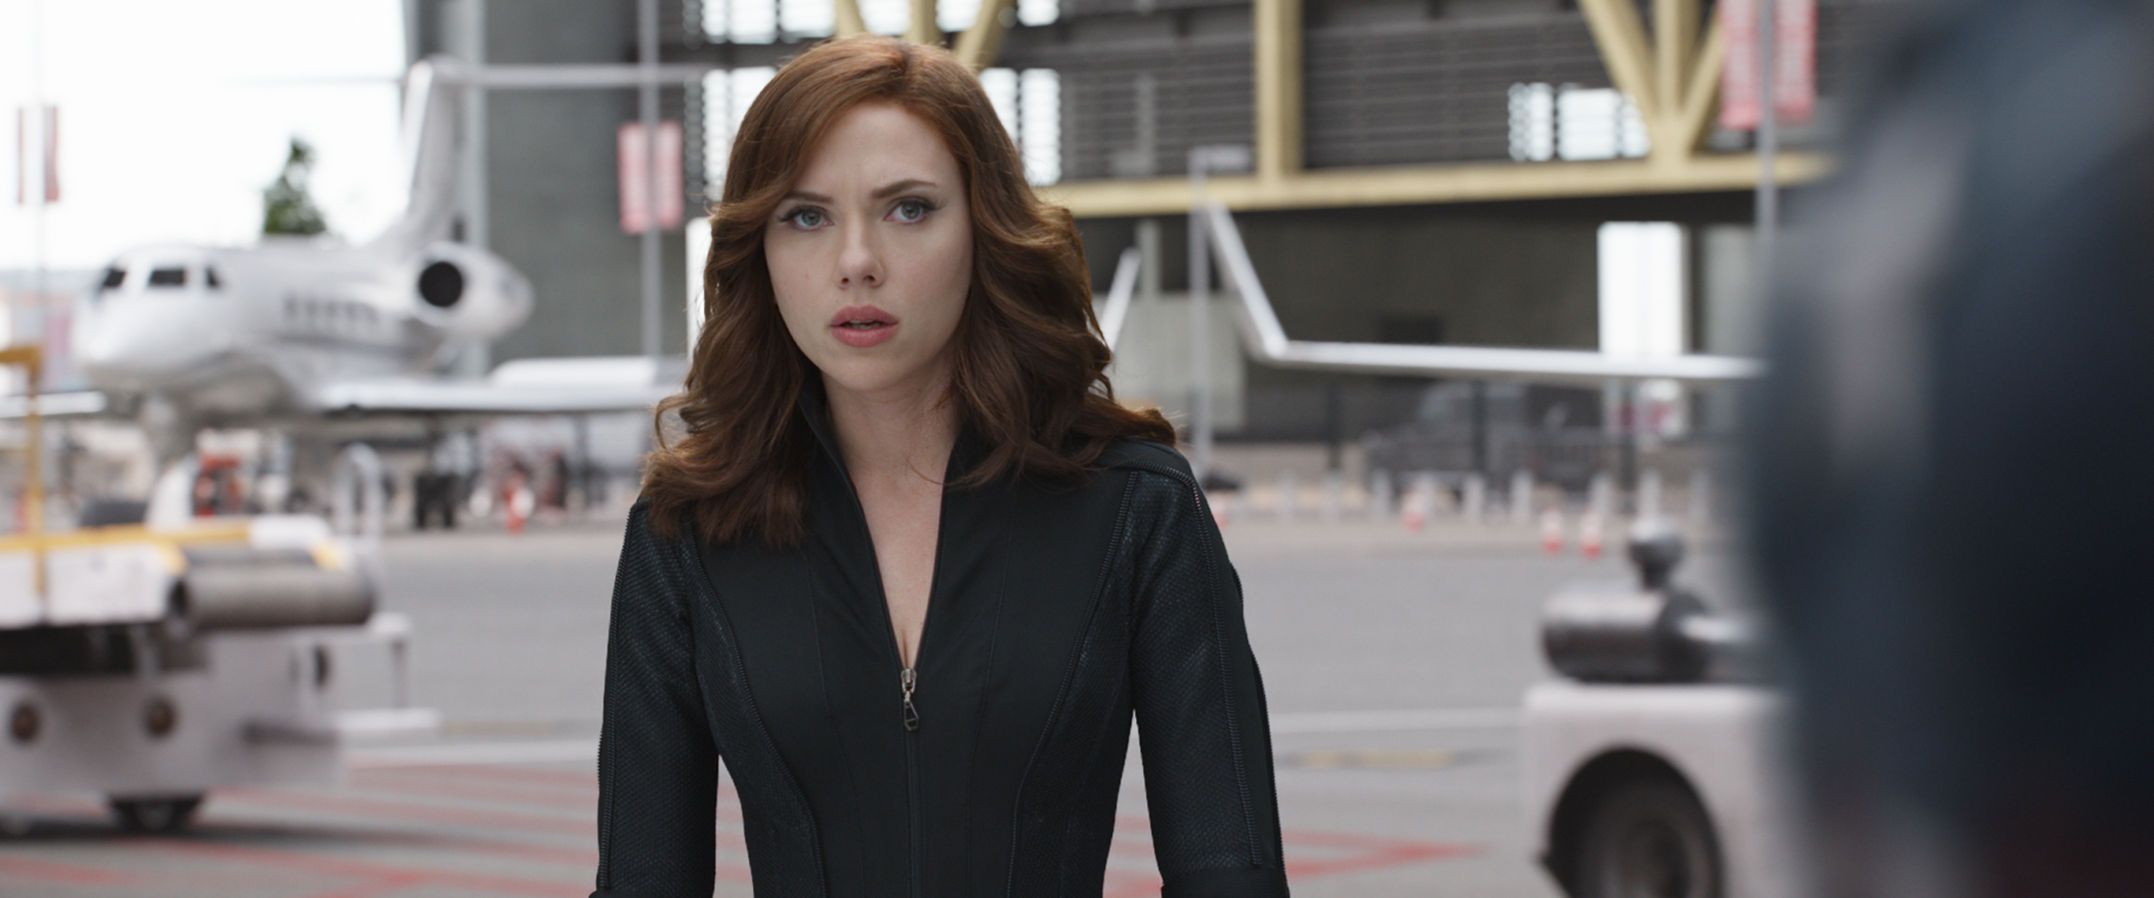 Captain America: Civil War Trailer 2 - Black Widow